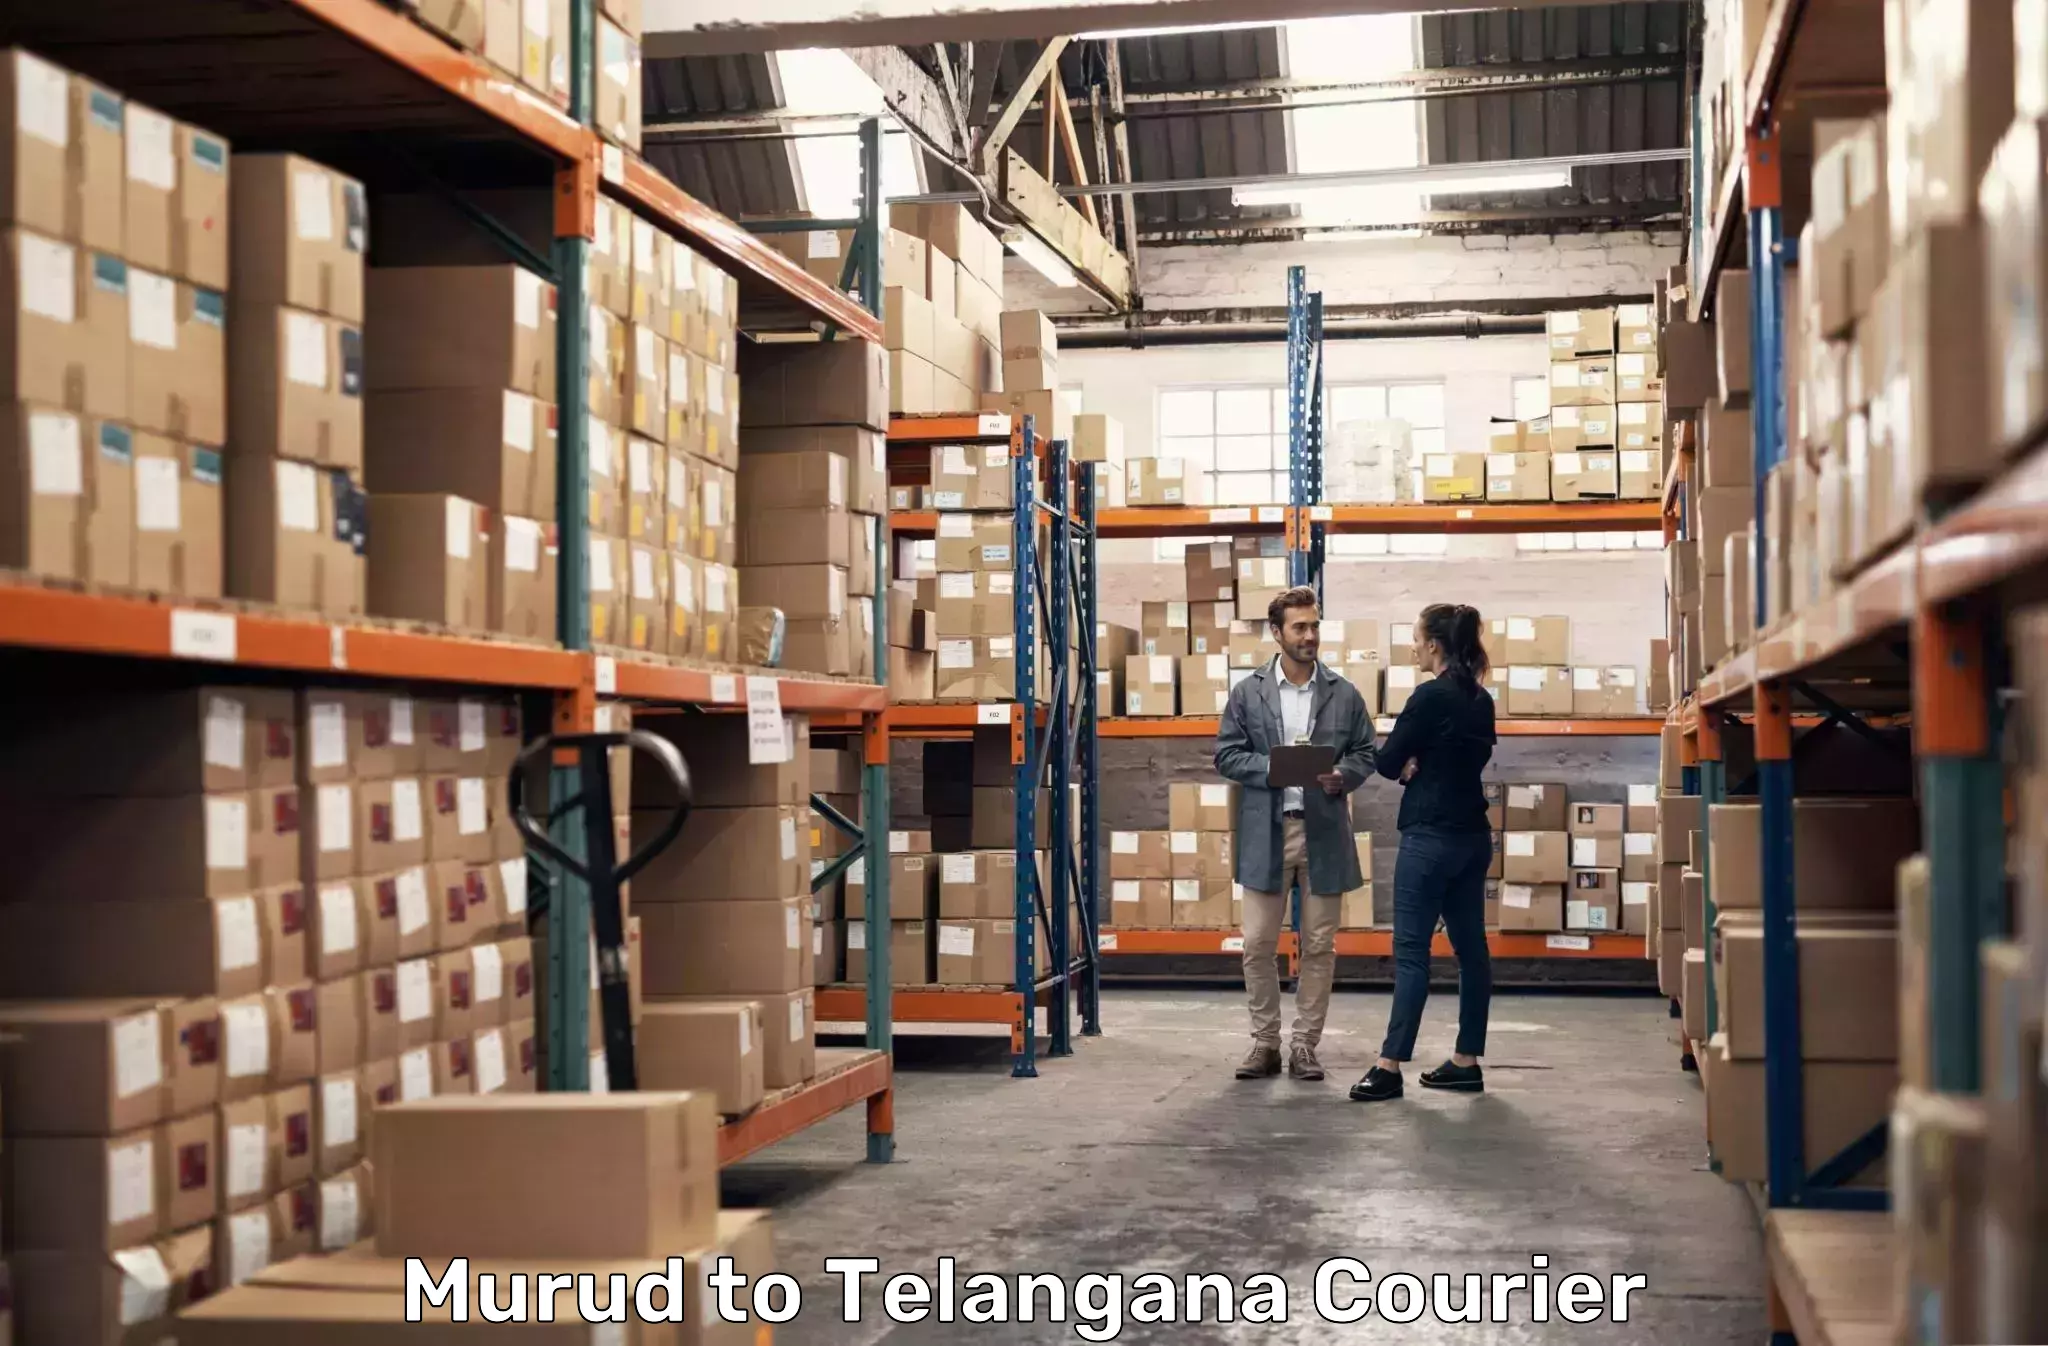 Global logistics network Murud to Medchal